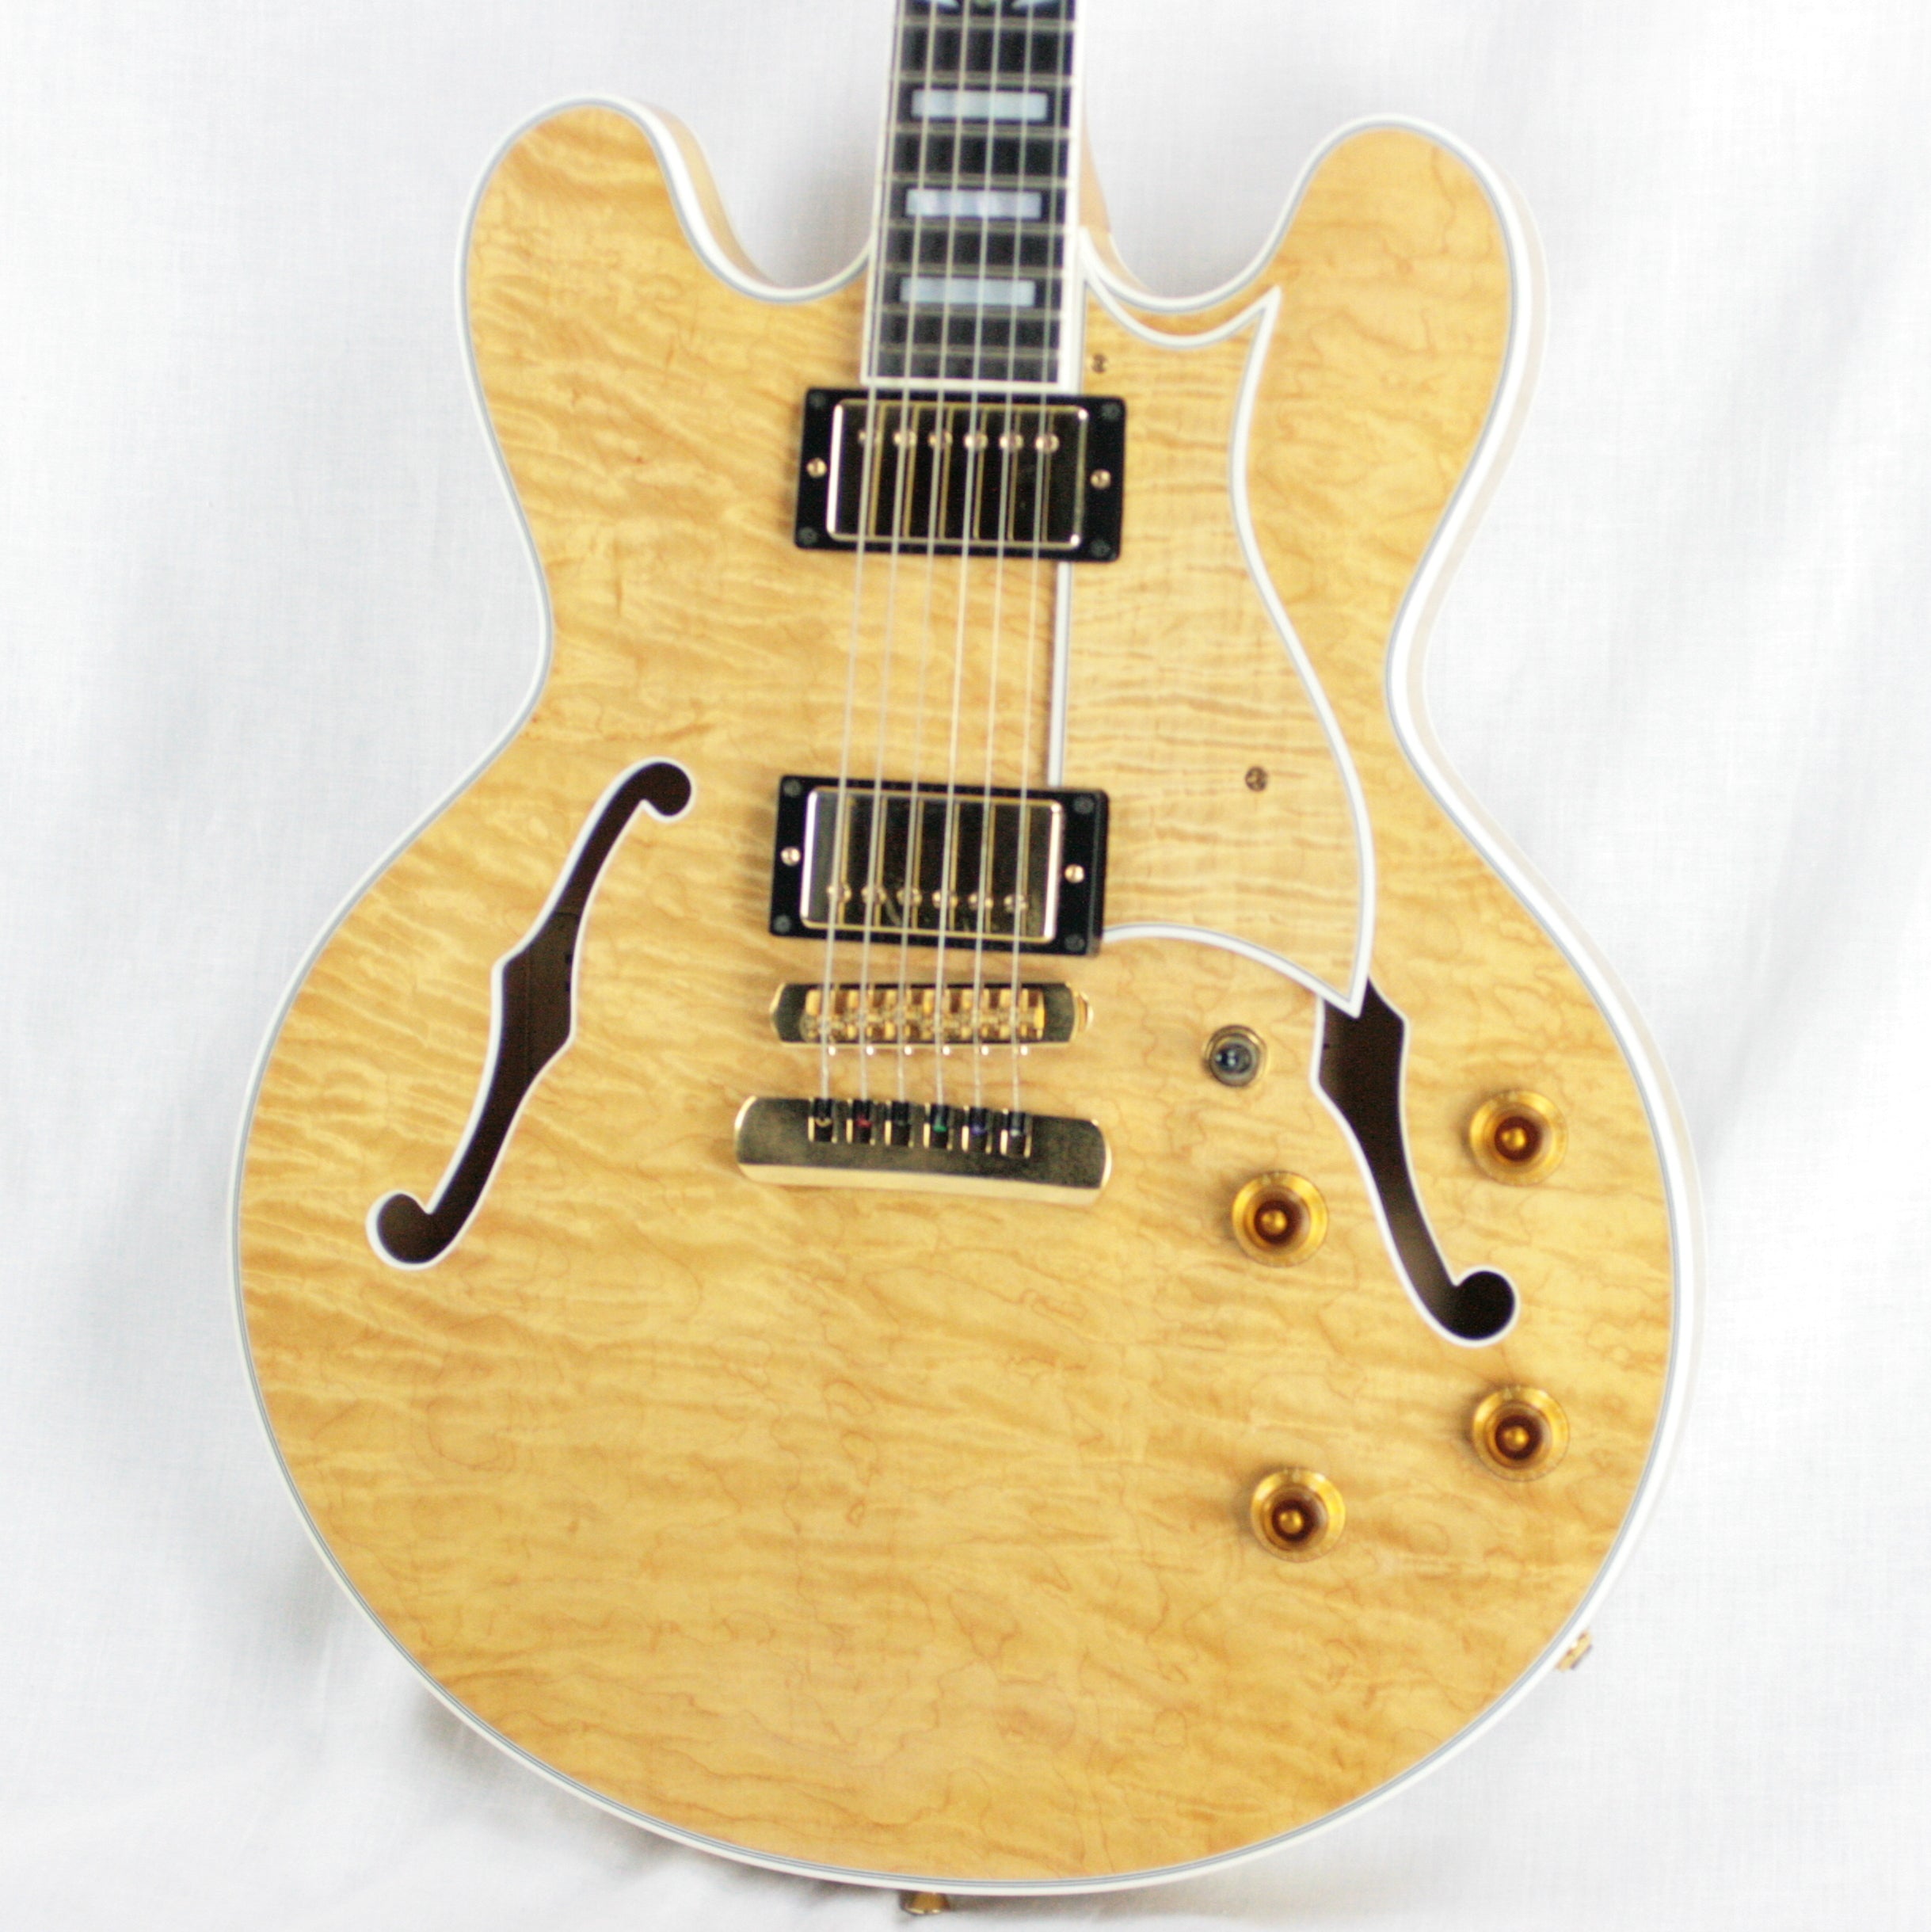 FLAME! 1996 Heritage H-555 Antique Natural Semi-Hollowbody Guitar! Made in USA Kalamazoo Factory!